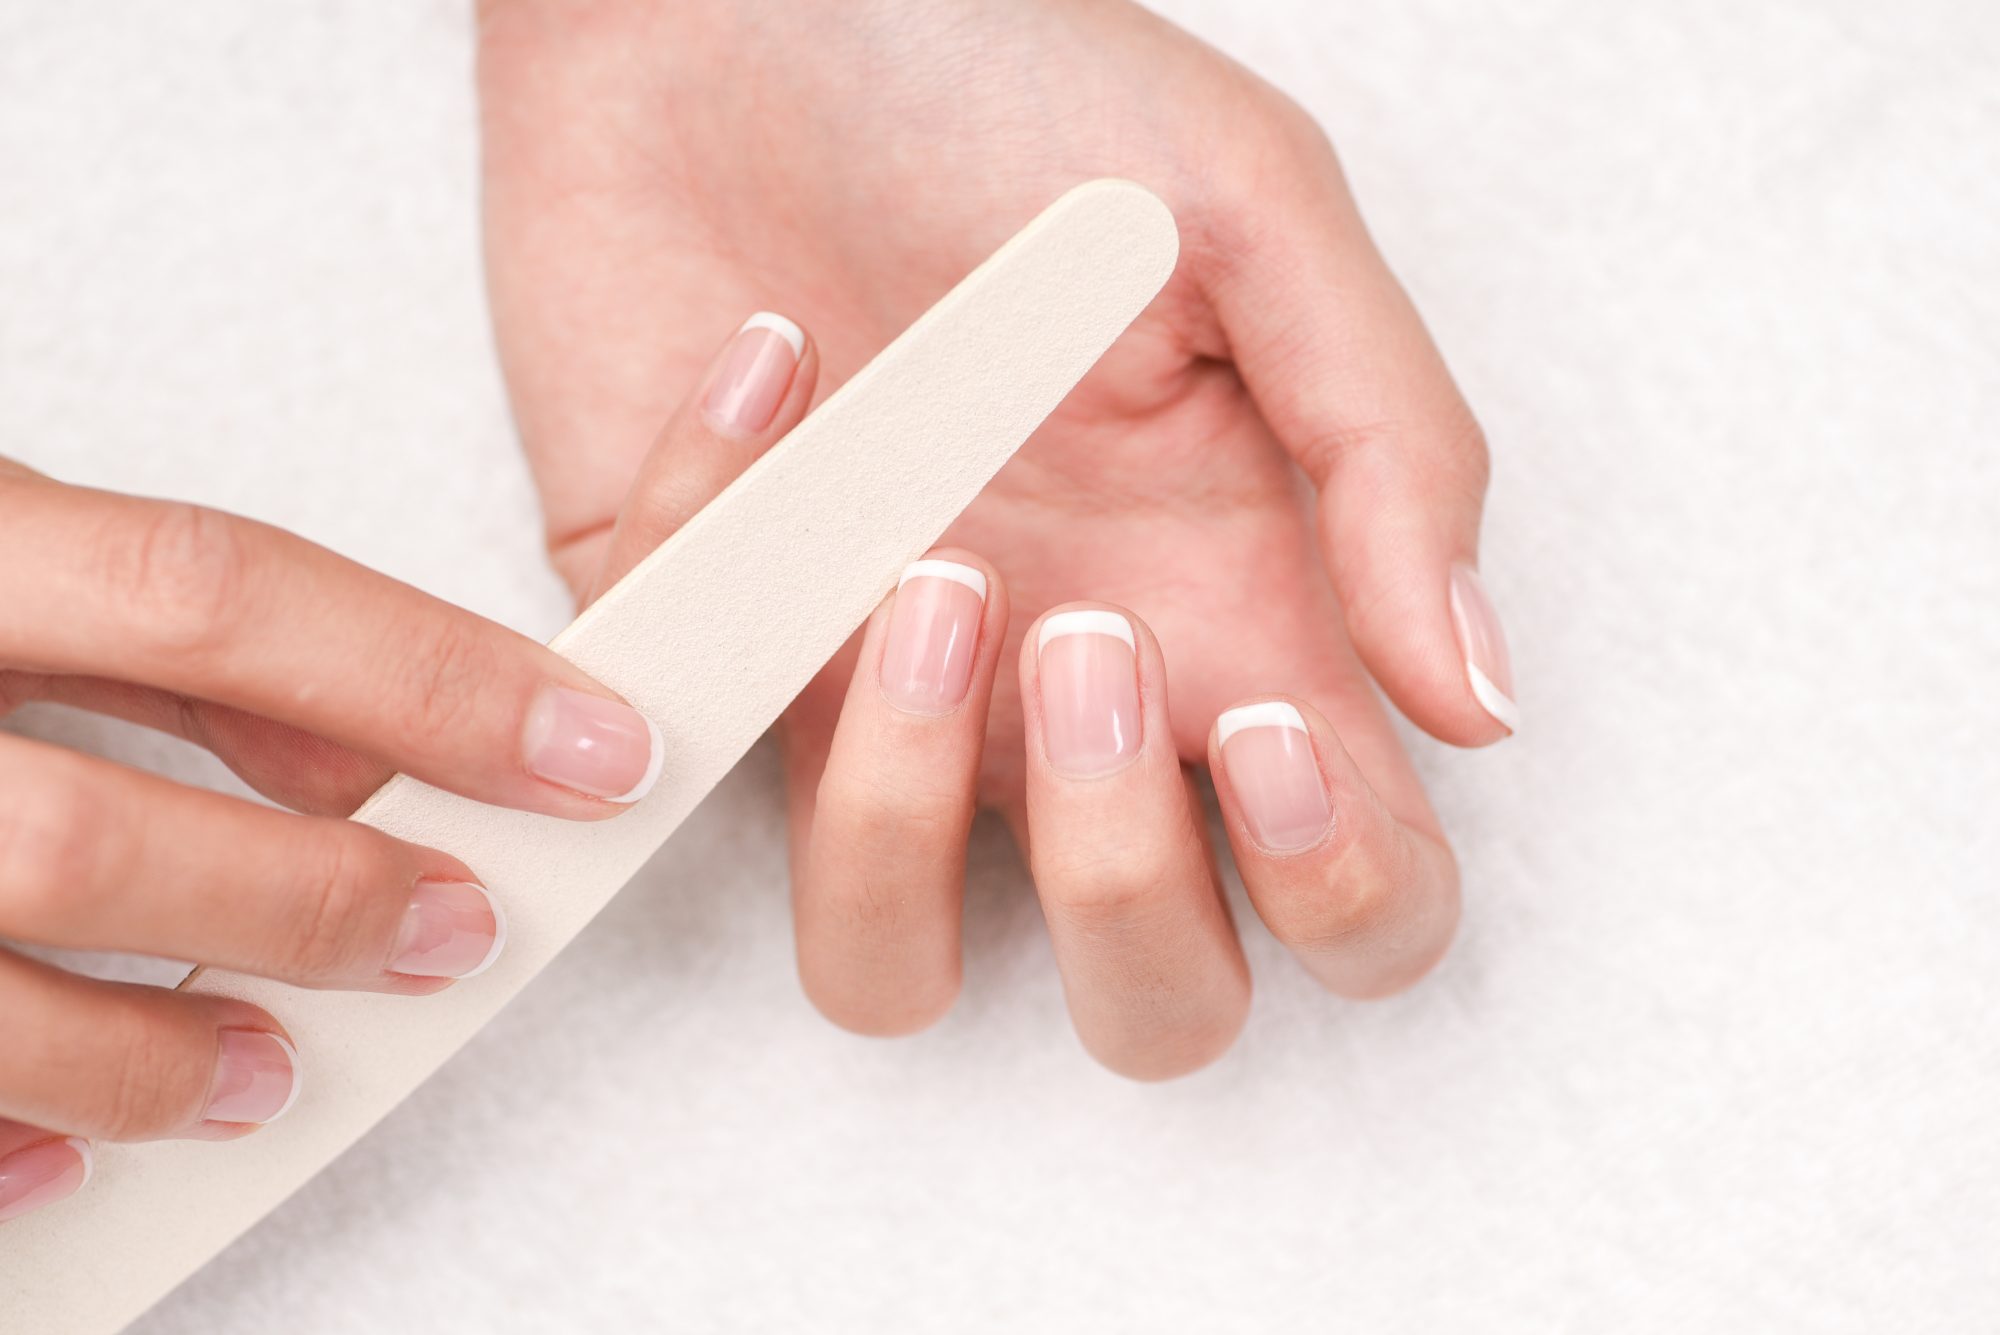 borken nail file, how to fix a broken nail